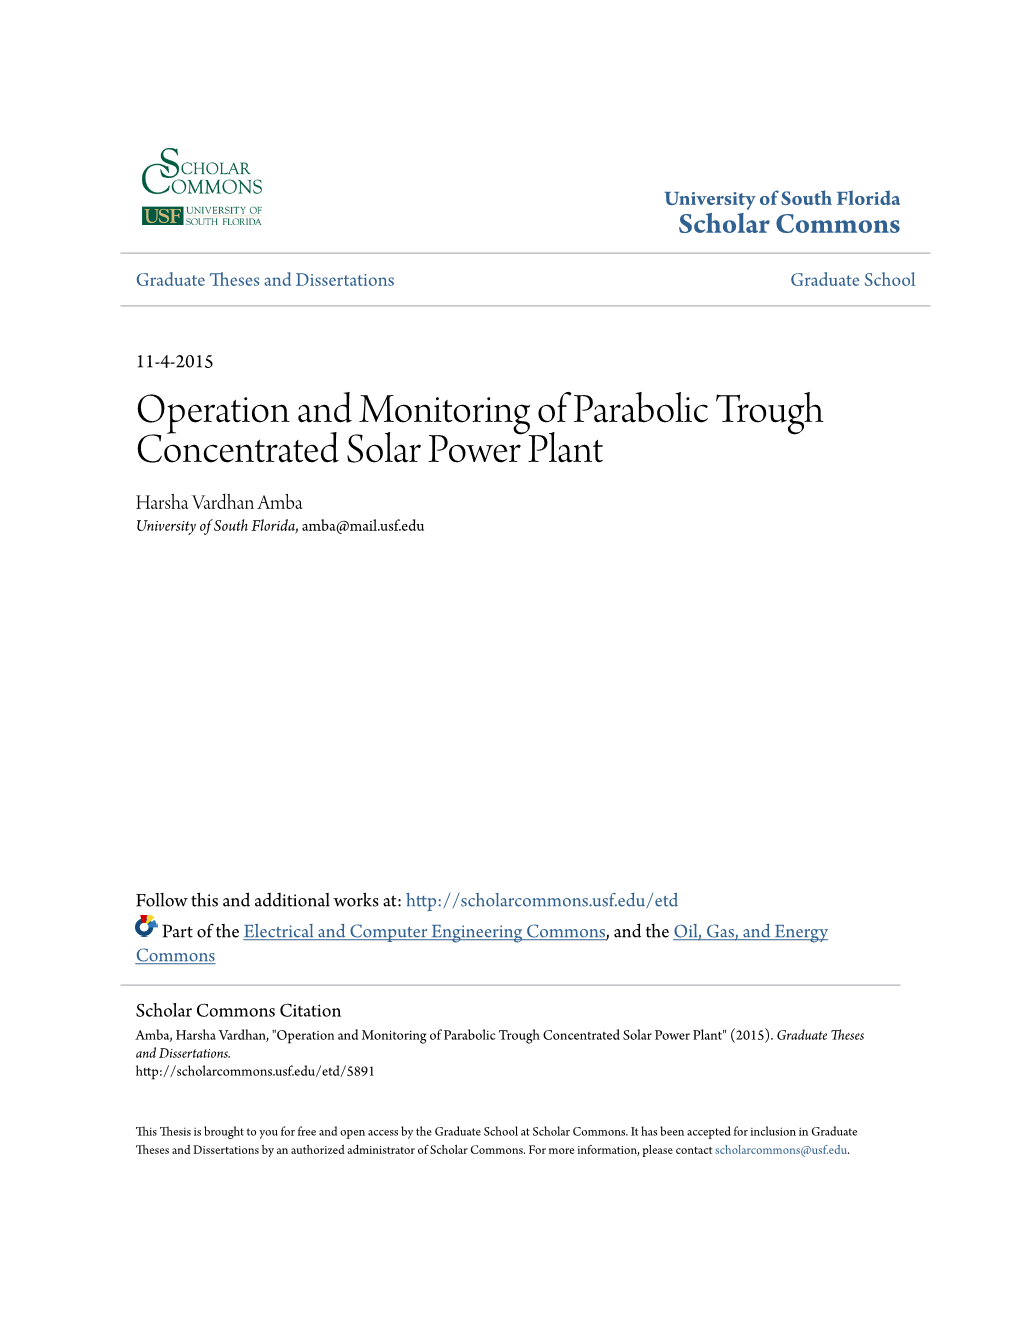 Operation and Monitoring of Parabolic Trough Concentrated Solar Power Plant Harsha Vardhan Amba University of South Florida, Amba@Mail.Usf.Edu